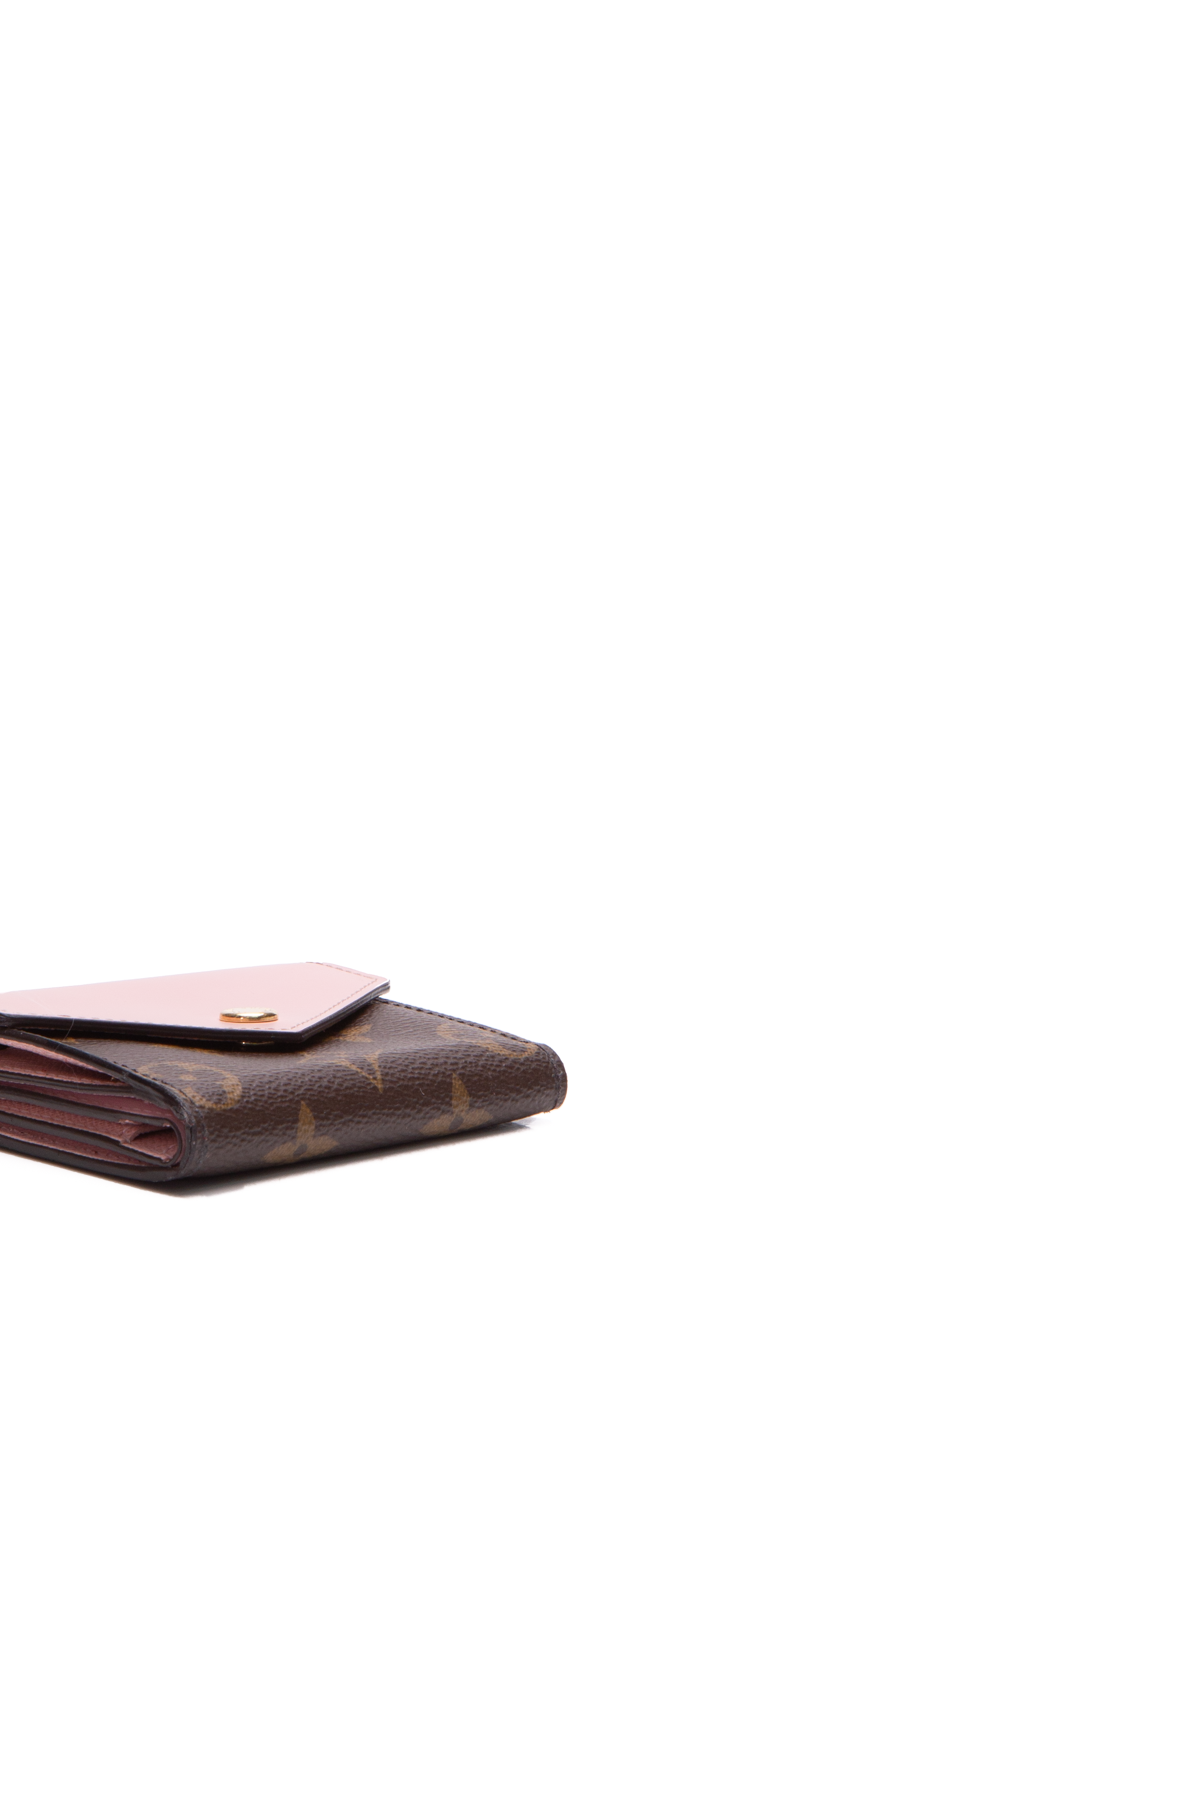 Louis Vuitton Monogram Zoe Small Wallet